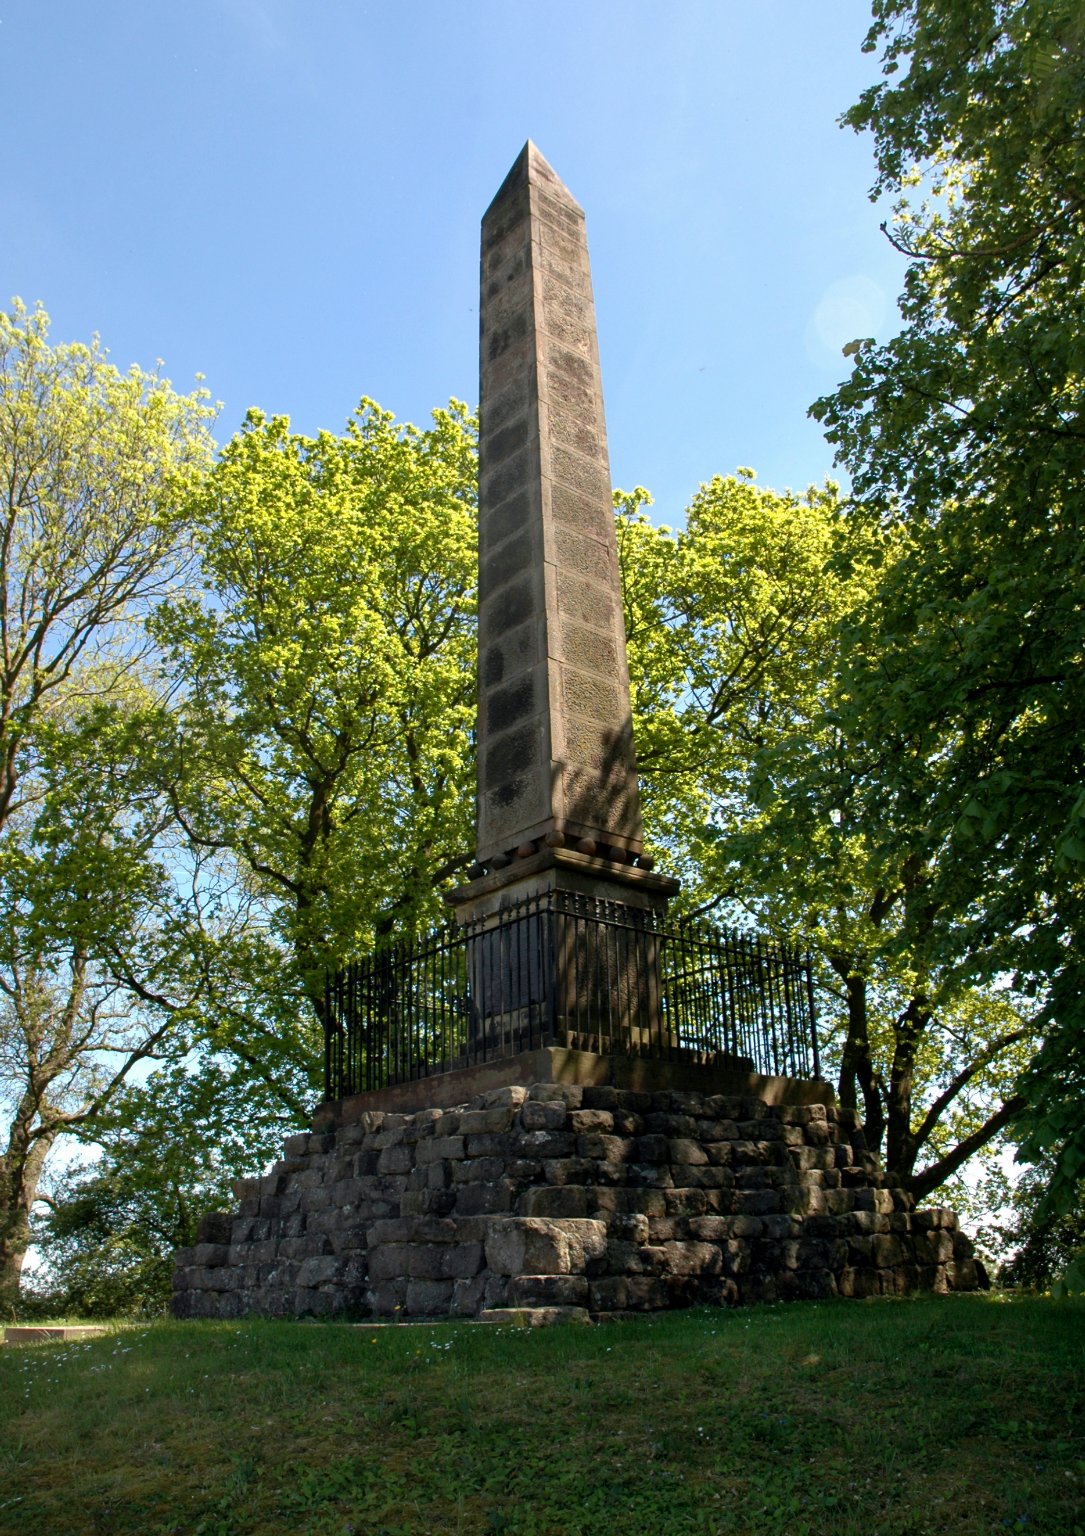 Battle of Naseby Monument